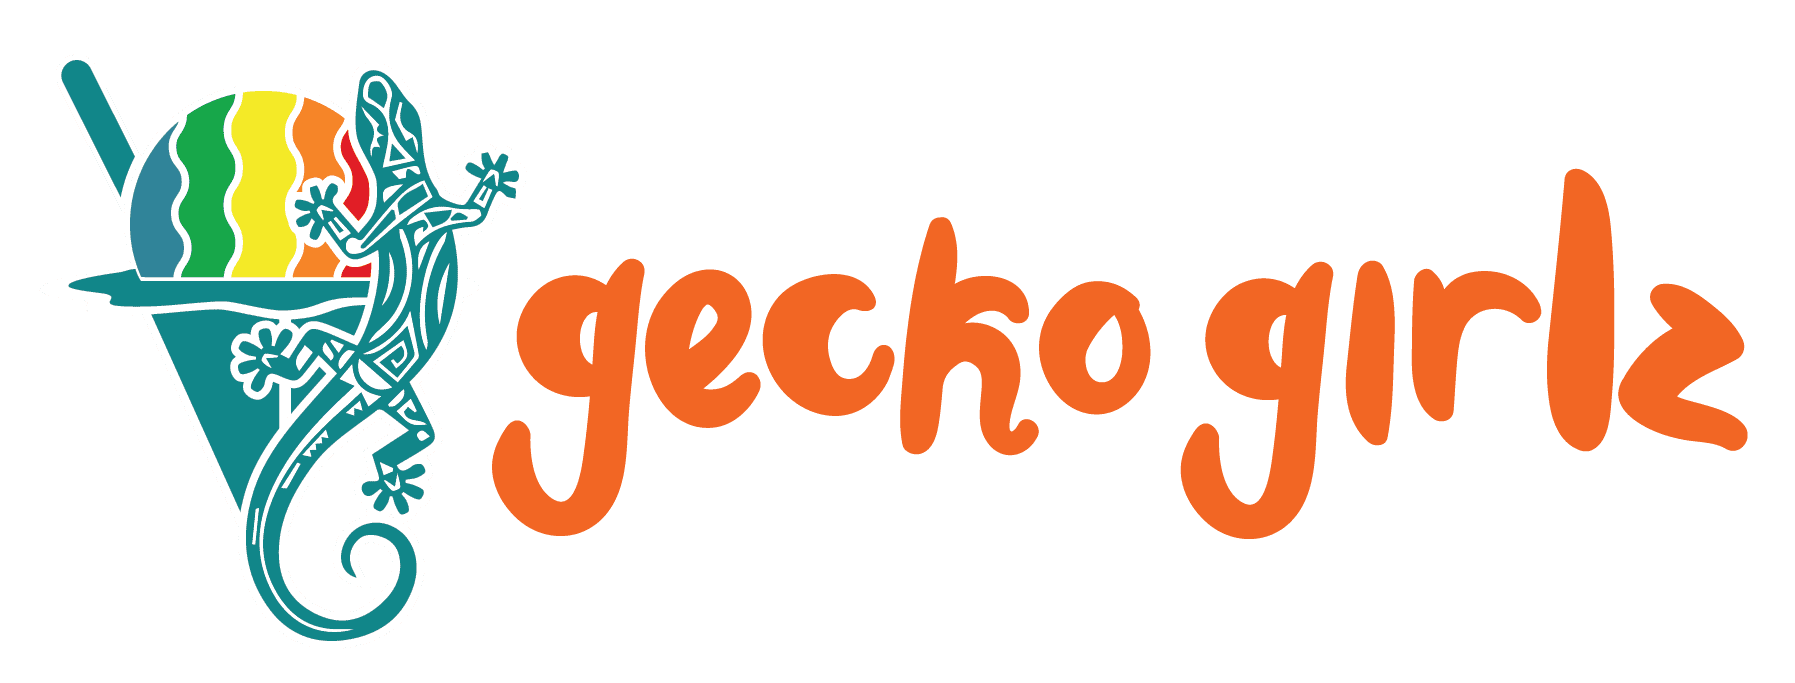 Gecko Girlz Shave Ice and Ice Cream Shop